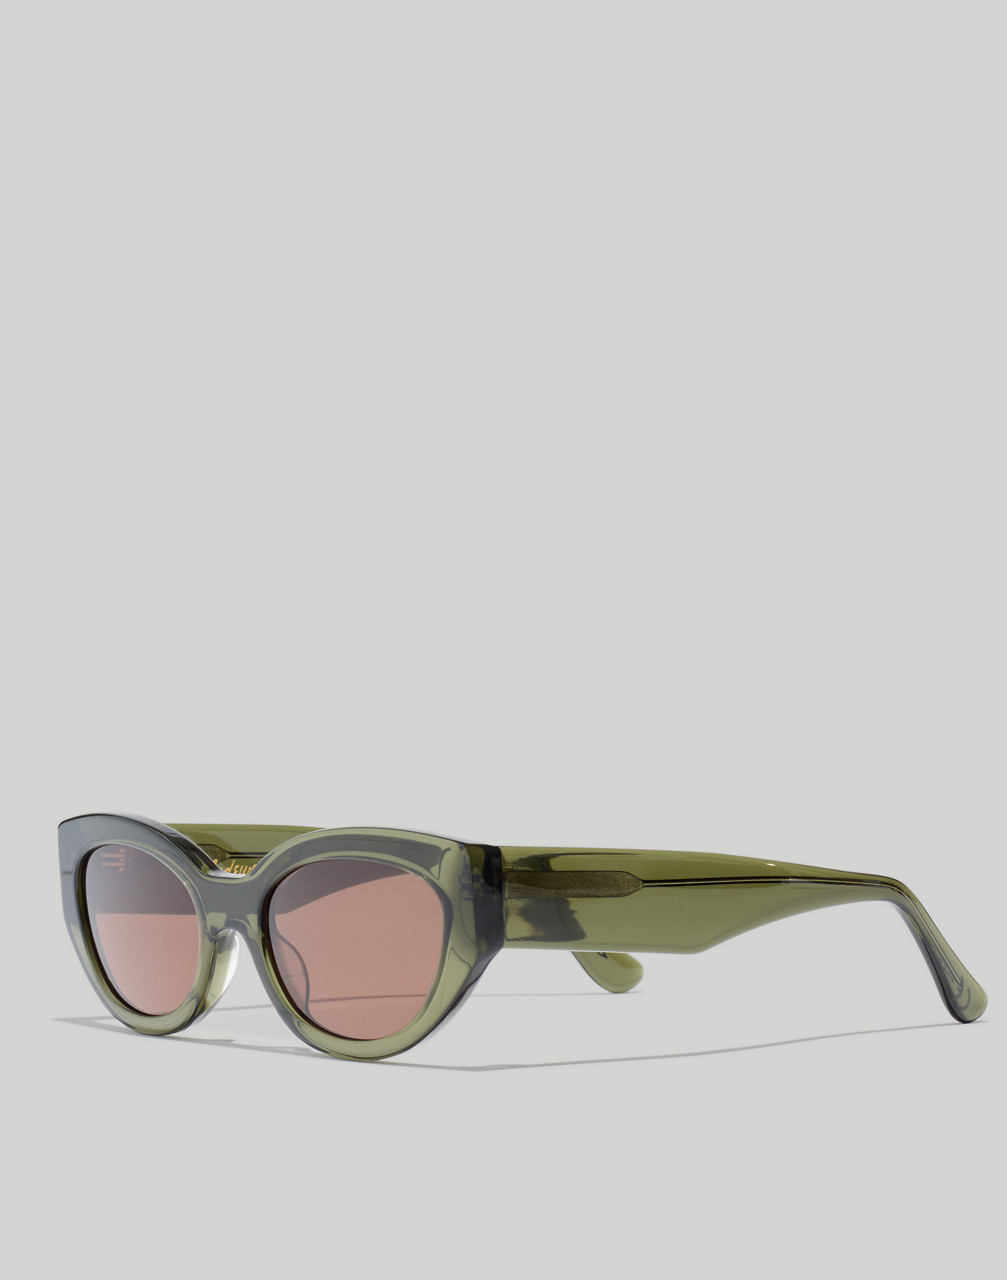 Mw Demmera Sunglasses In Olive Surplus